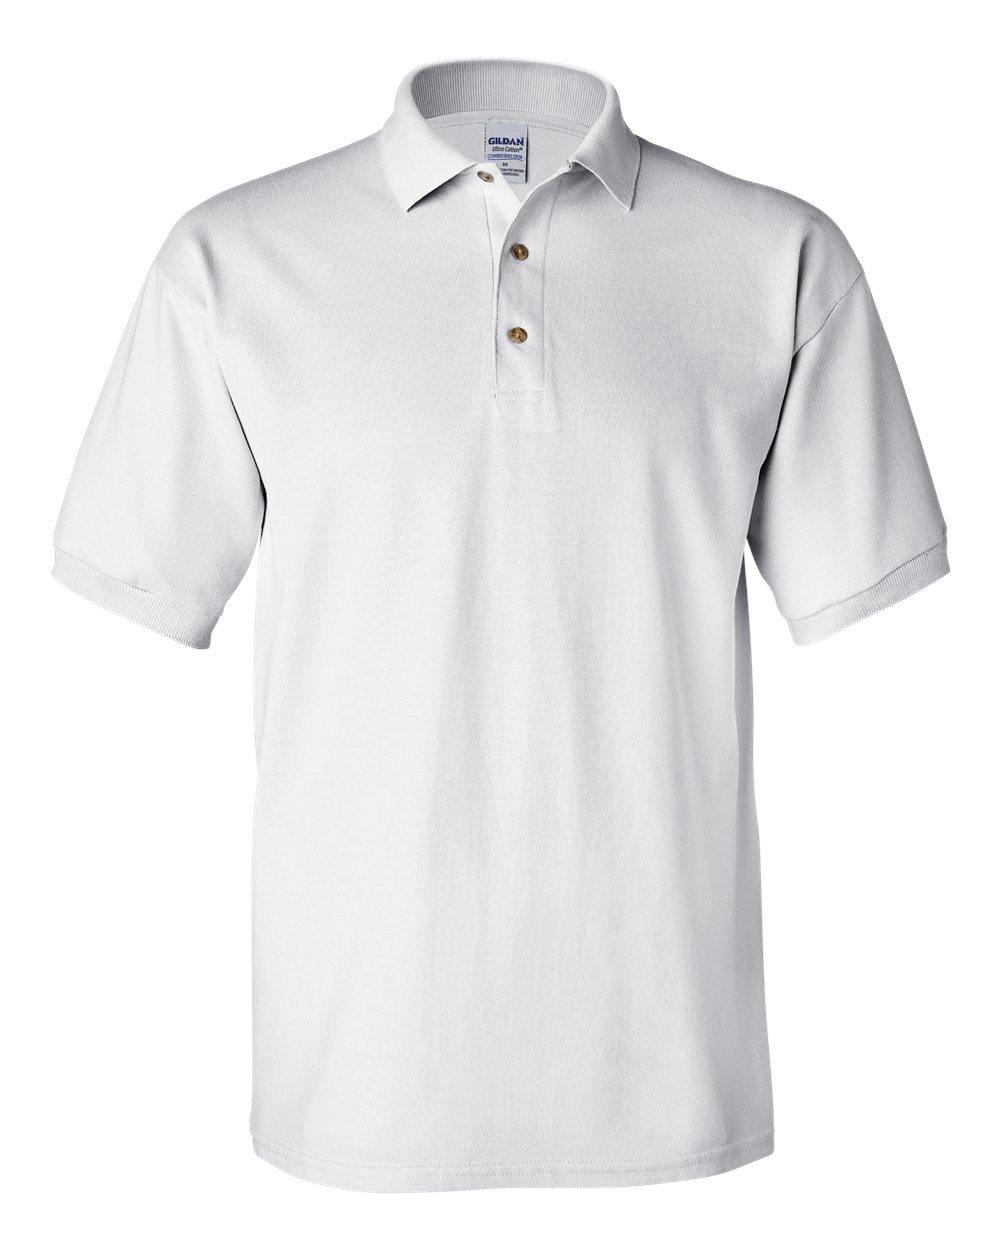 New GILDEN Ultra Cotton Mens Activewear Heavyweight Polo Shirt     FREE SHIPPING